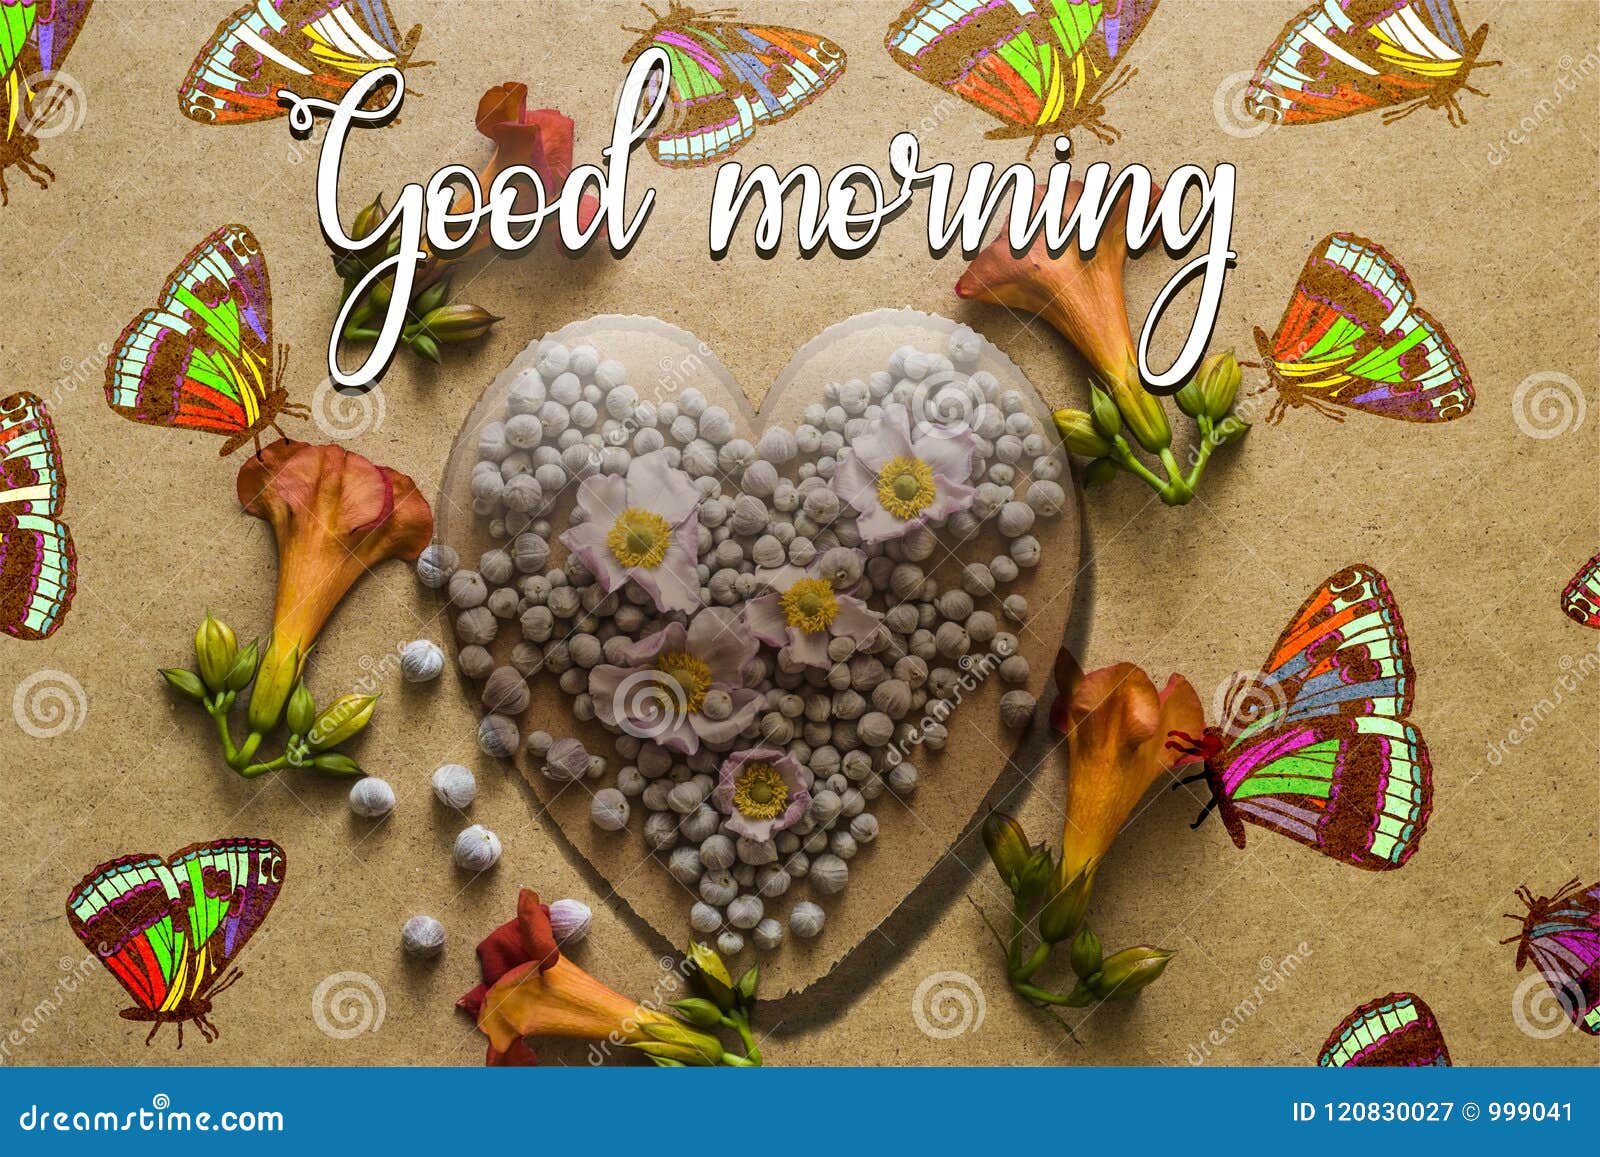 Good Morning Flower Buds Card Illustration Stock Image Image Of